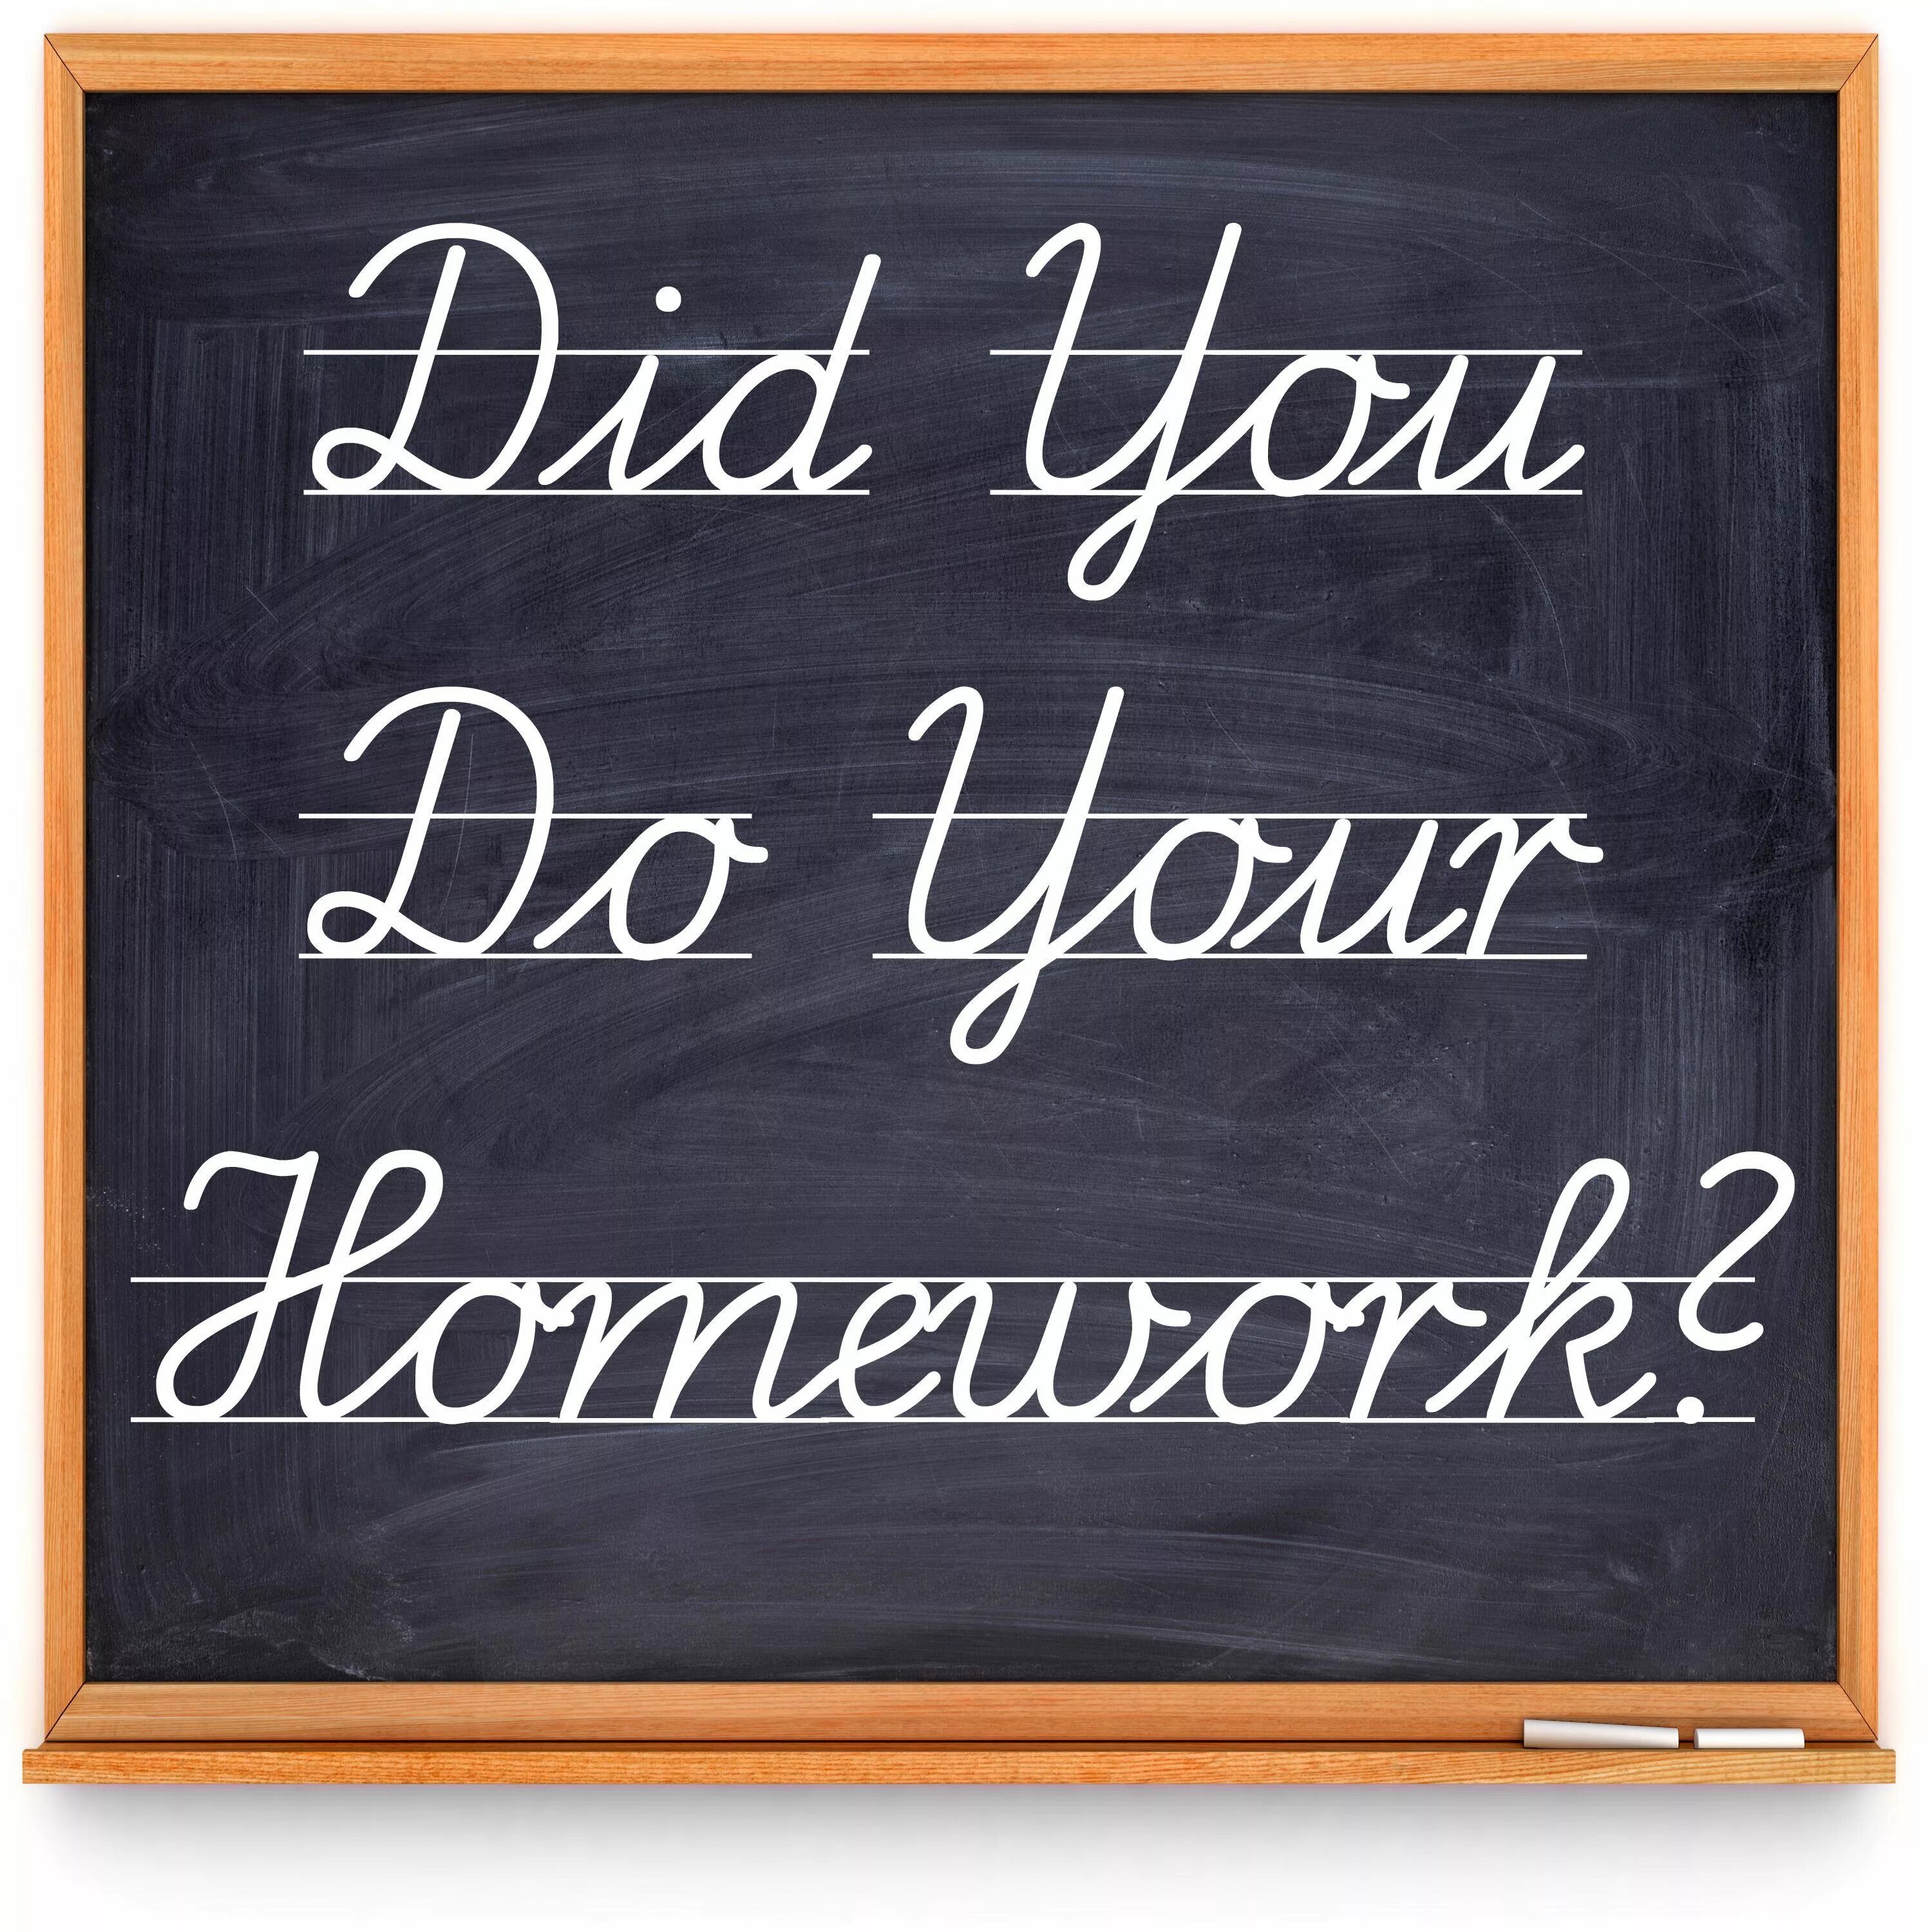 Did you do your homework. Your homework. ... Do your homework in English. Homework картинка.